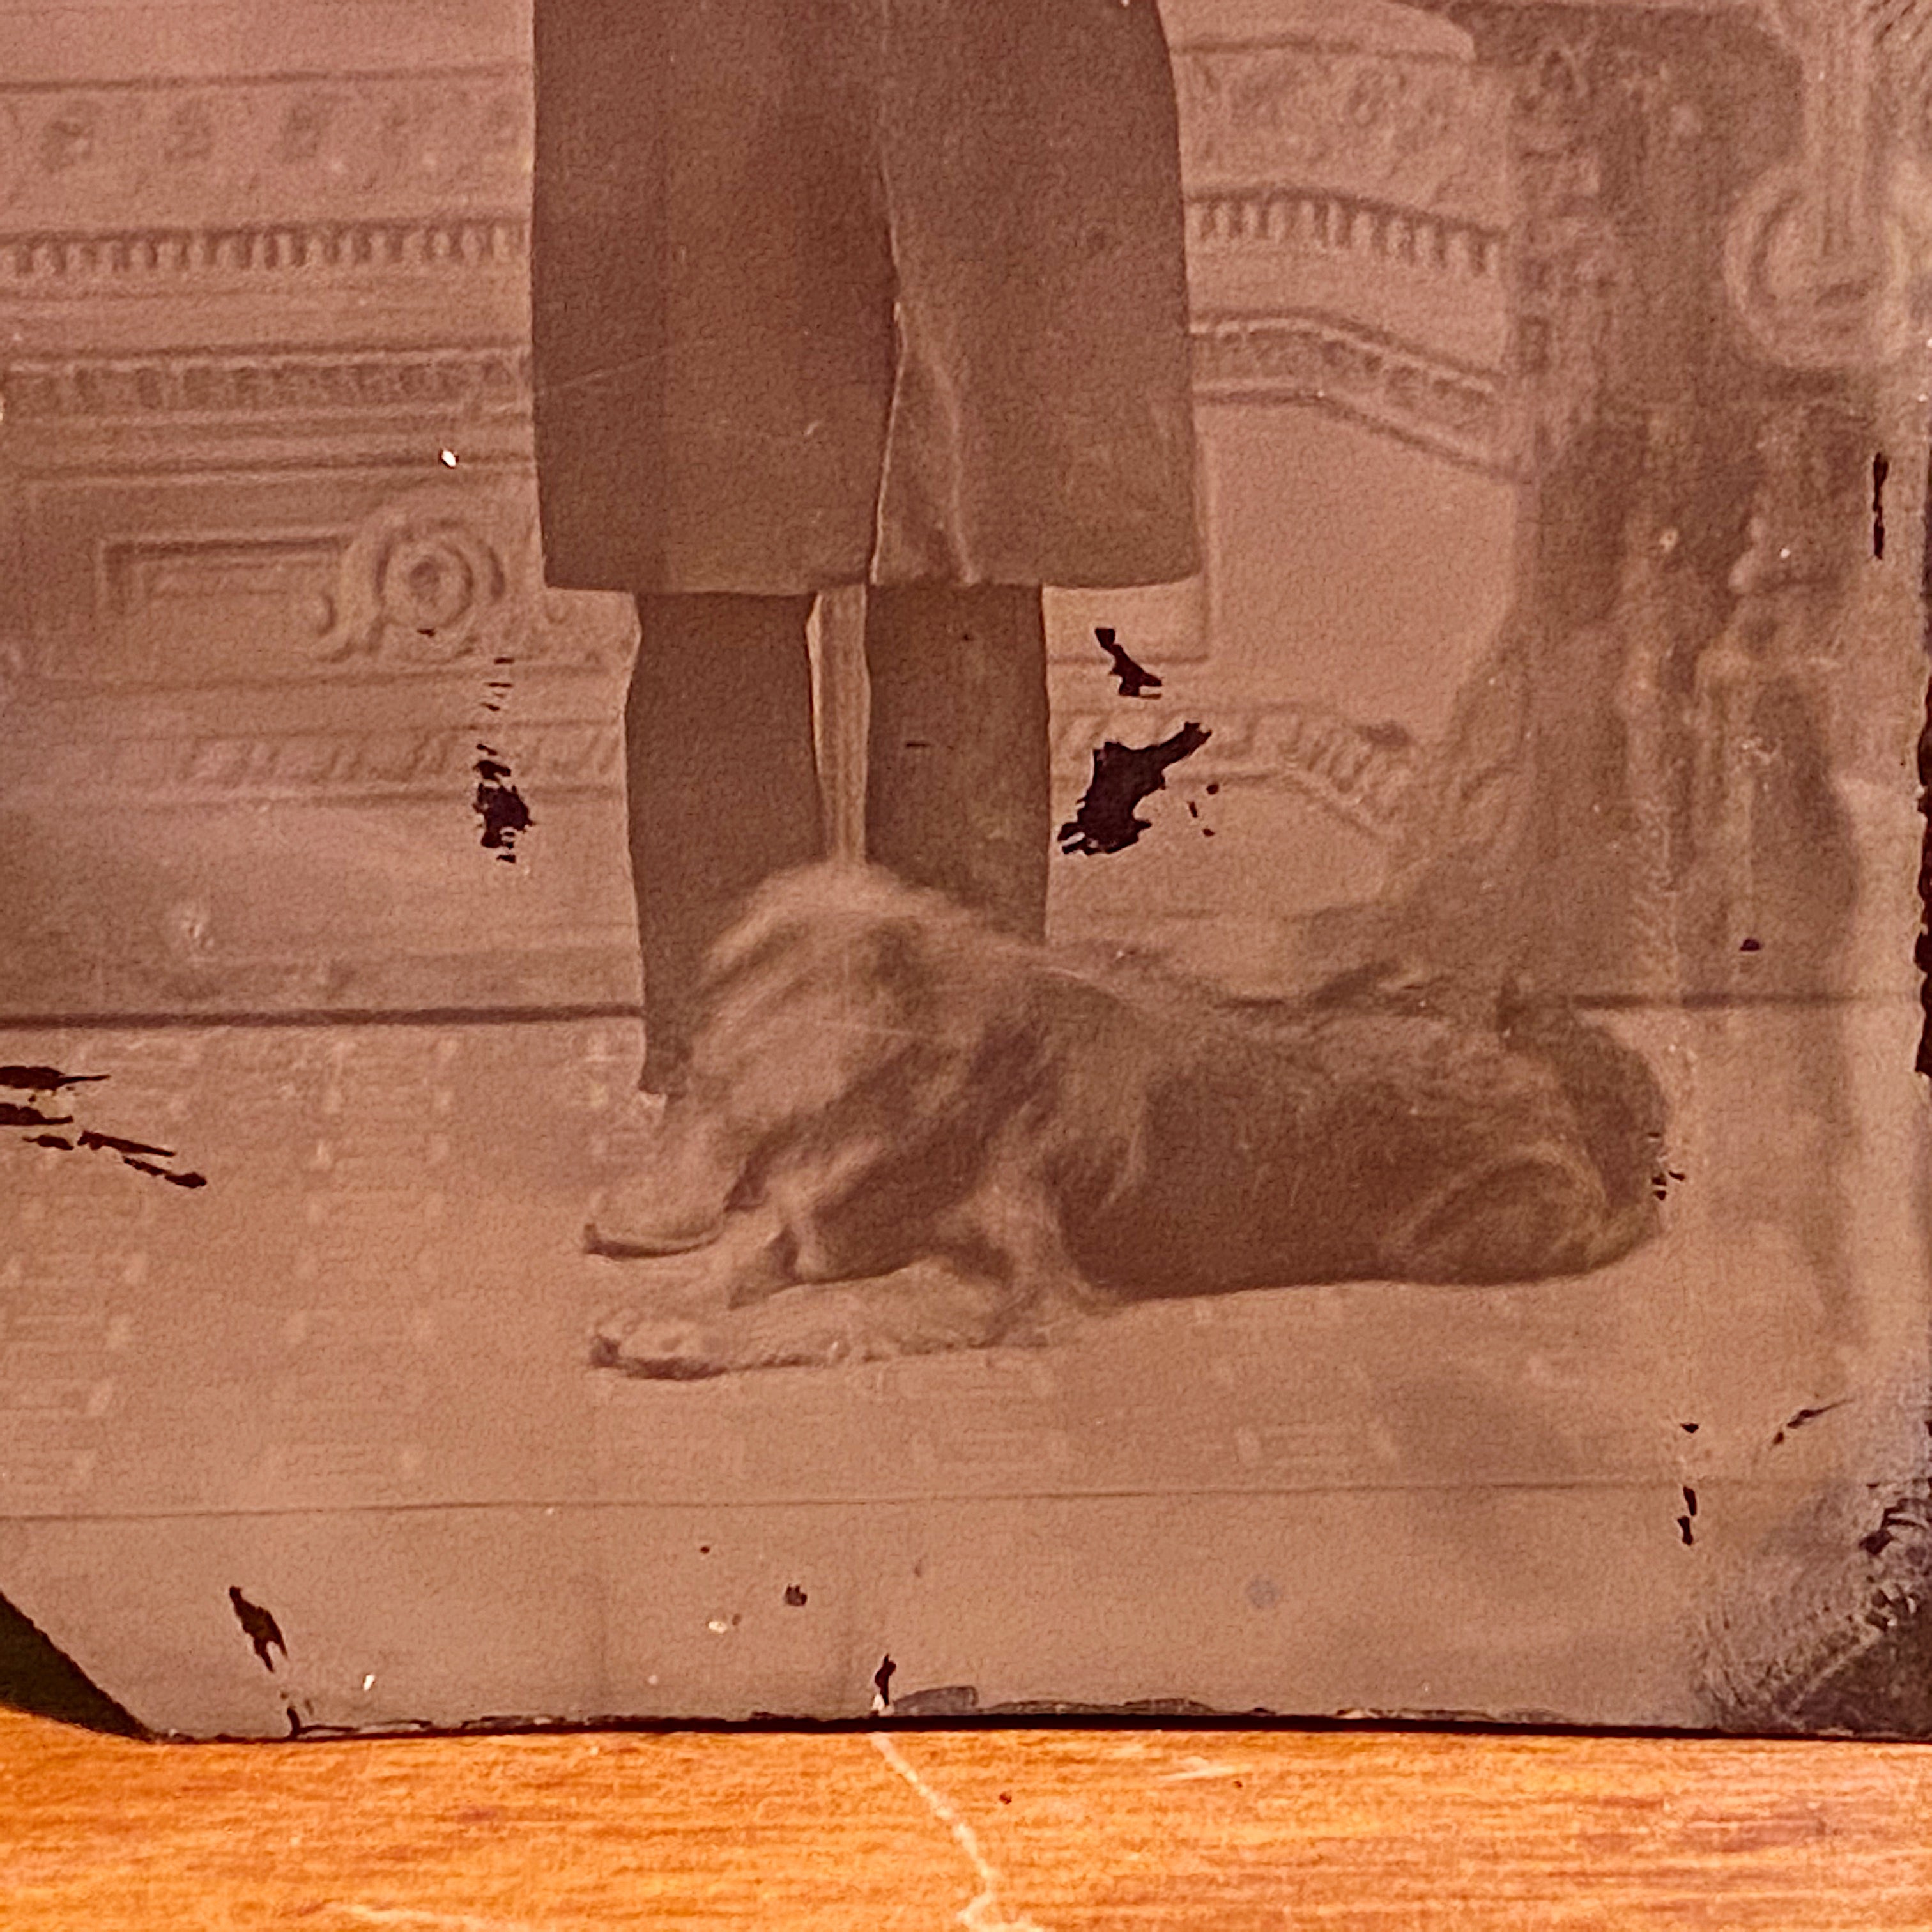 Antique Tintype of Serious Man and Dog |  Rare Pet Photography